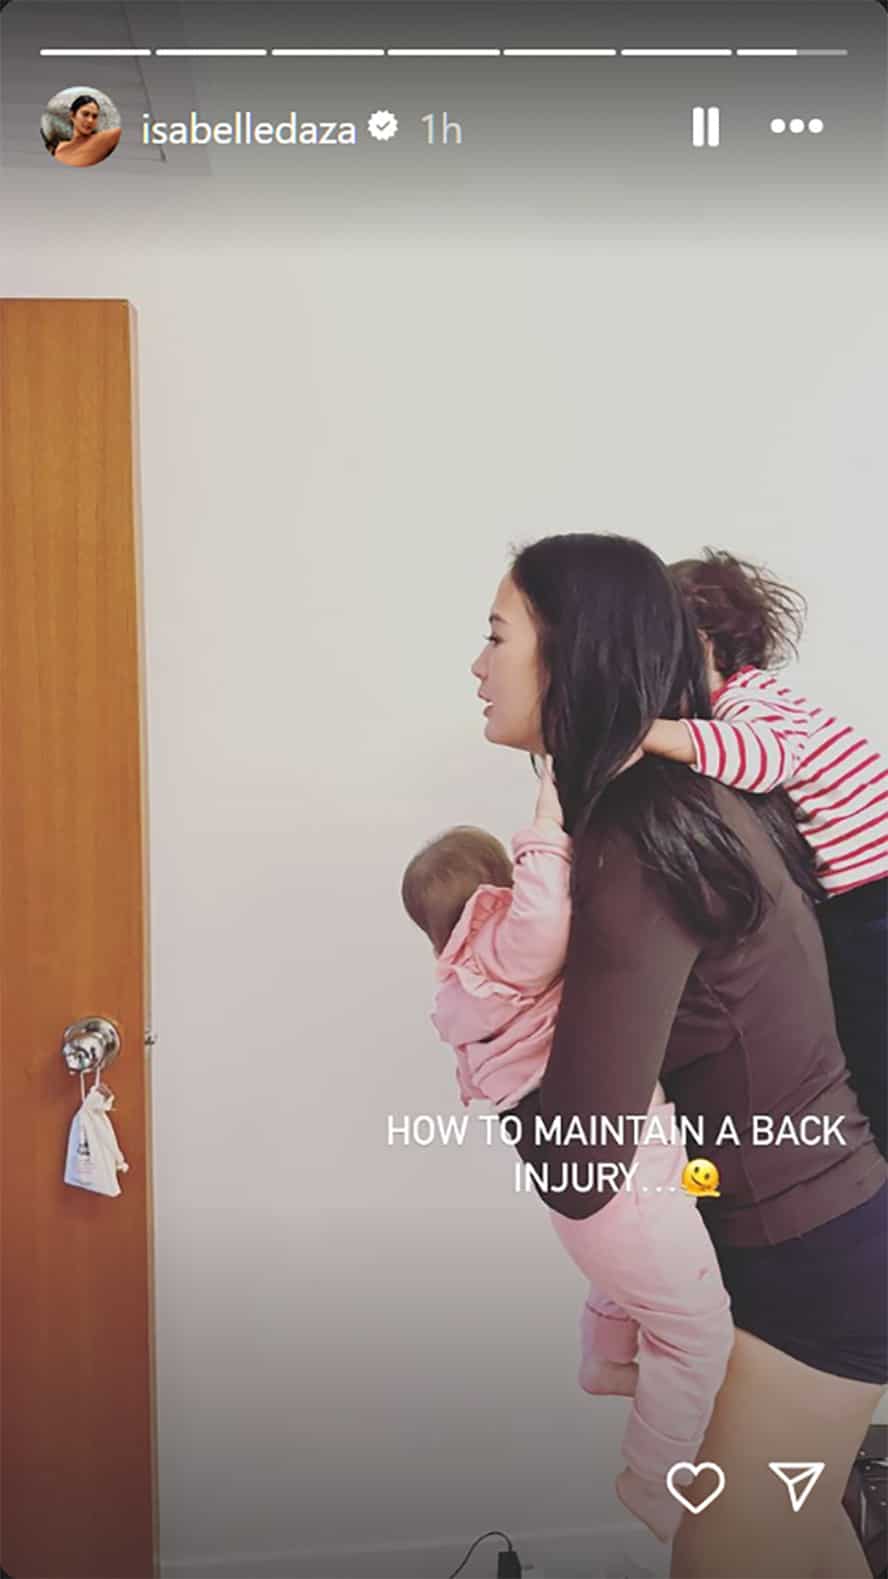 Isabelle Daza, ipinost funny pic kasama mga anak: “How to maintain a back injury”